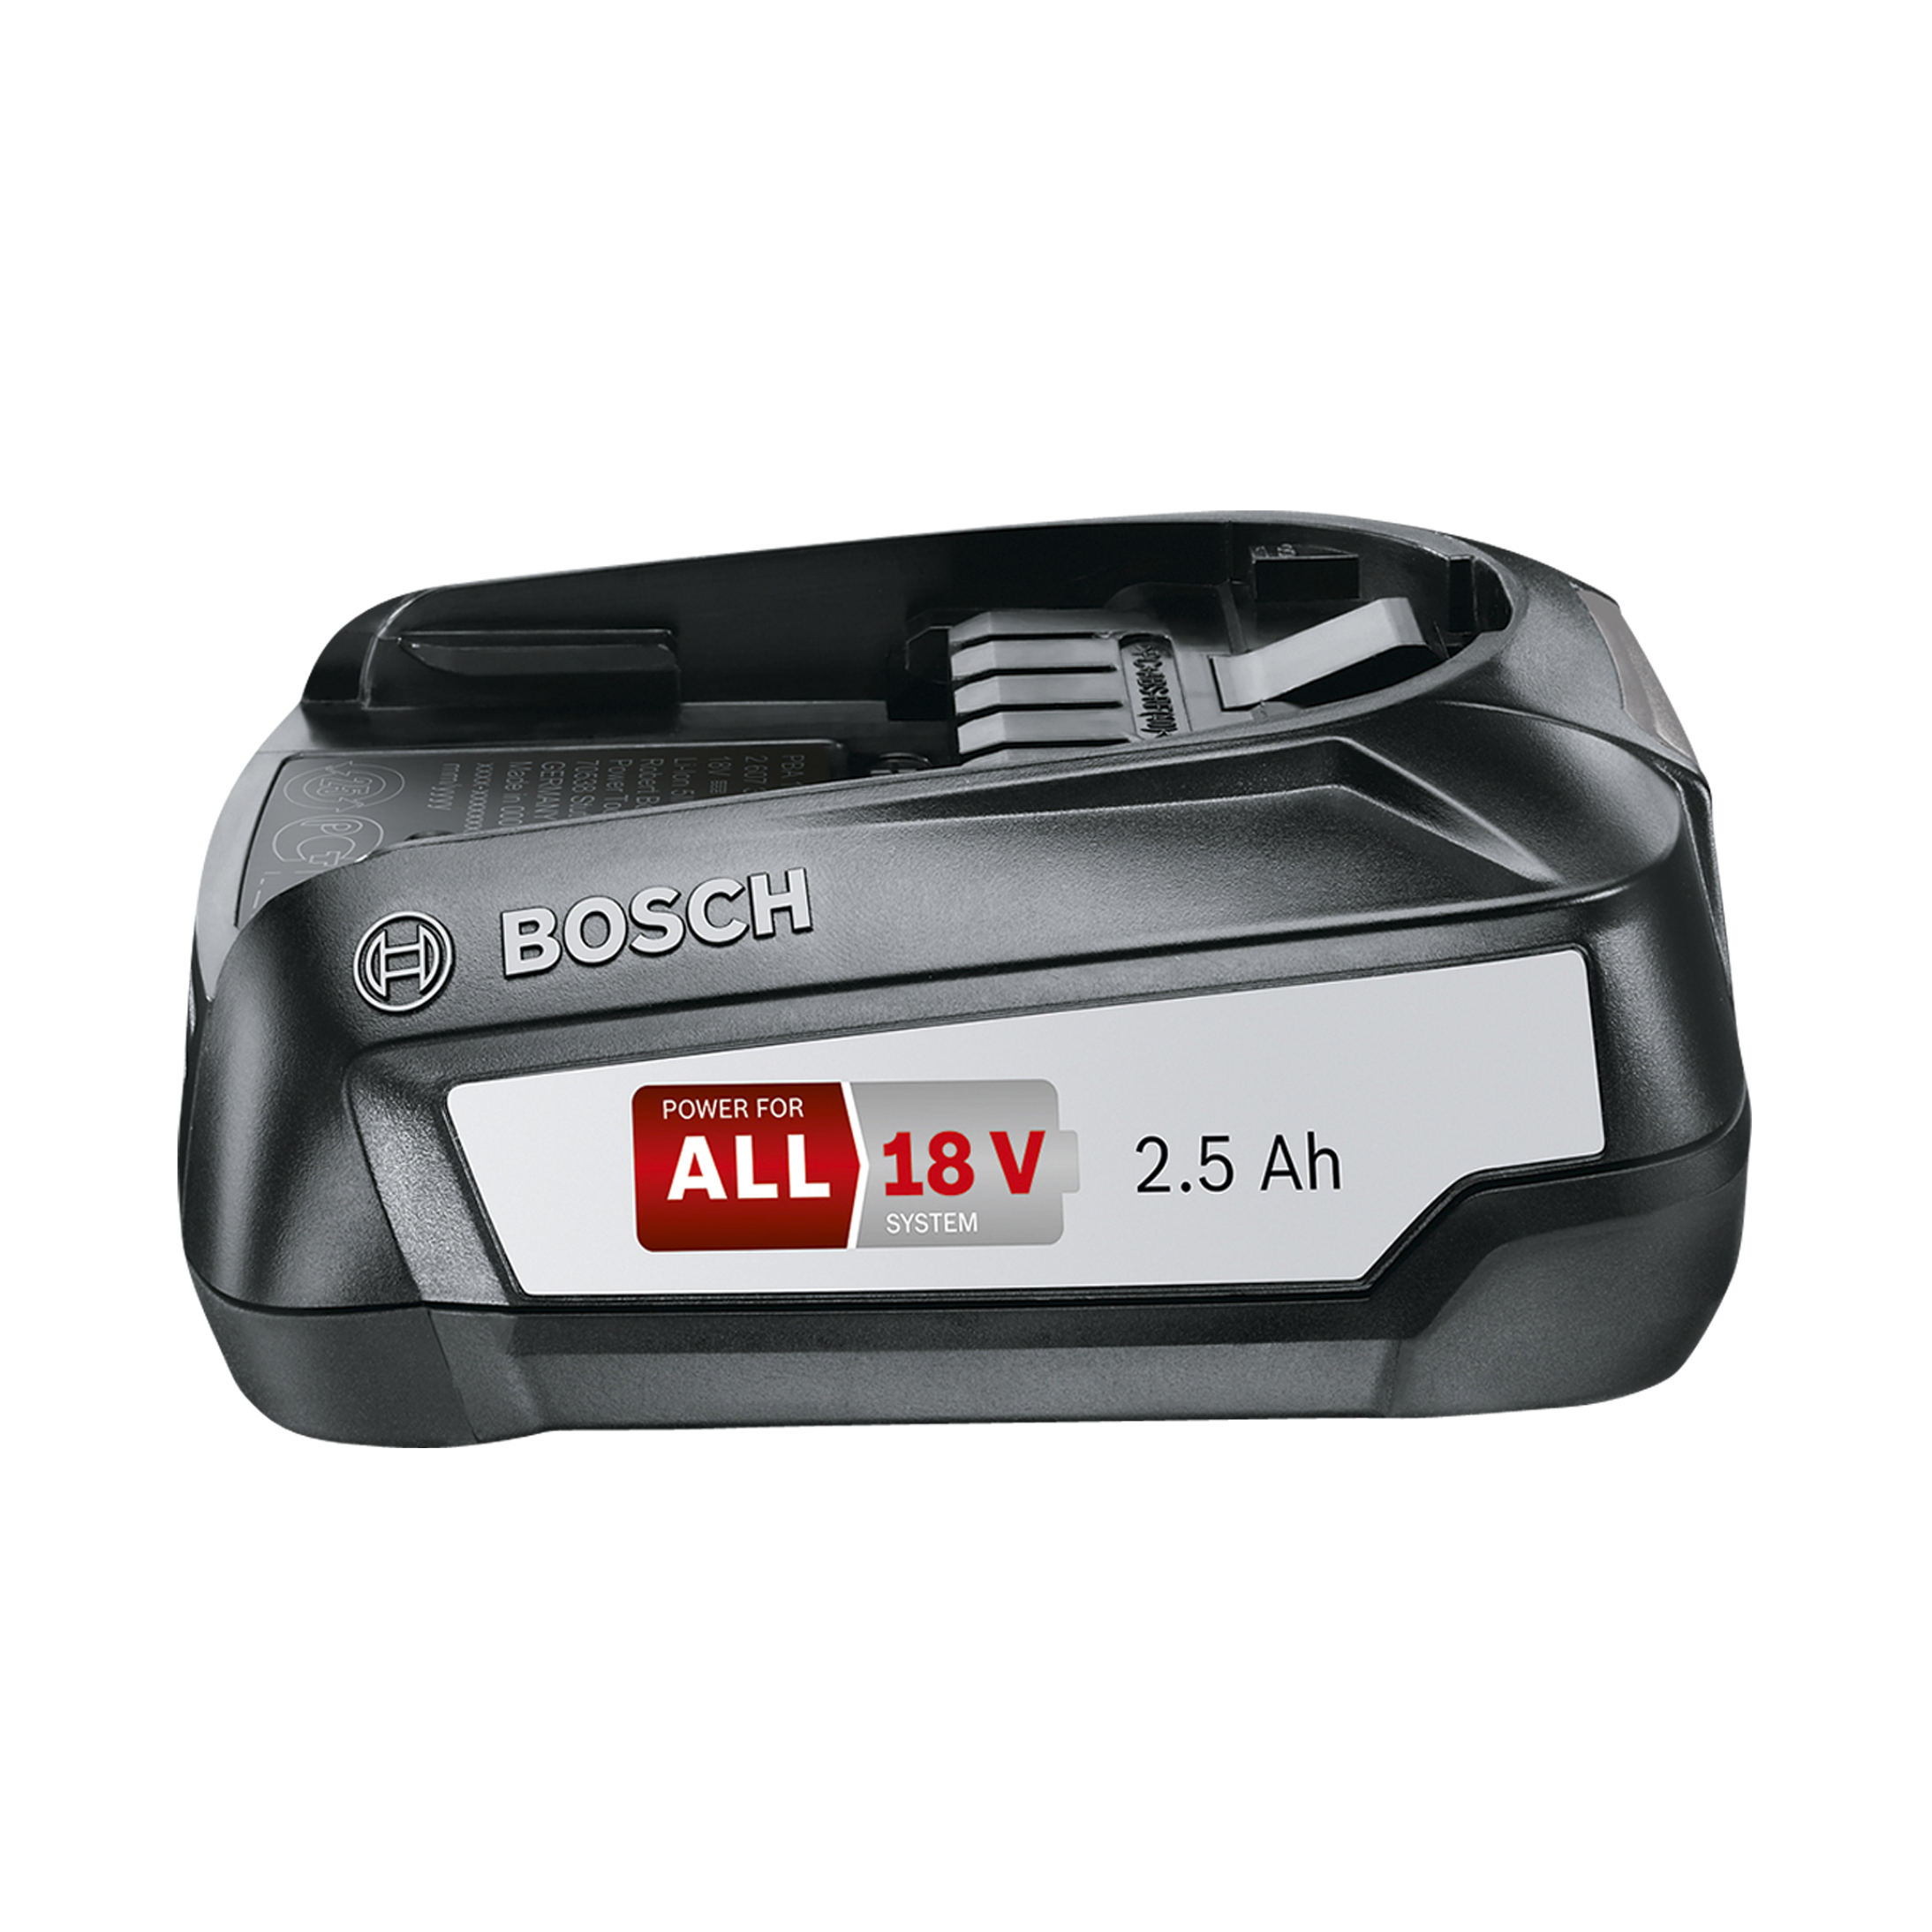 Купить аккумулятор для пылесоса бош. Bosch Power for all 18v 2.0Ah. Bosch Power for all 18v аккумулятор. Bosch all 18v 2.5 Ah. Аккумулятор Bosch Power for all 18 в.